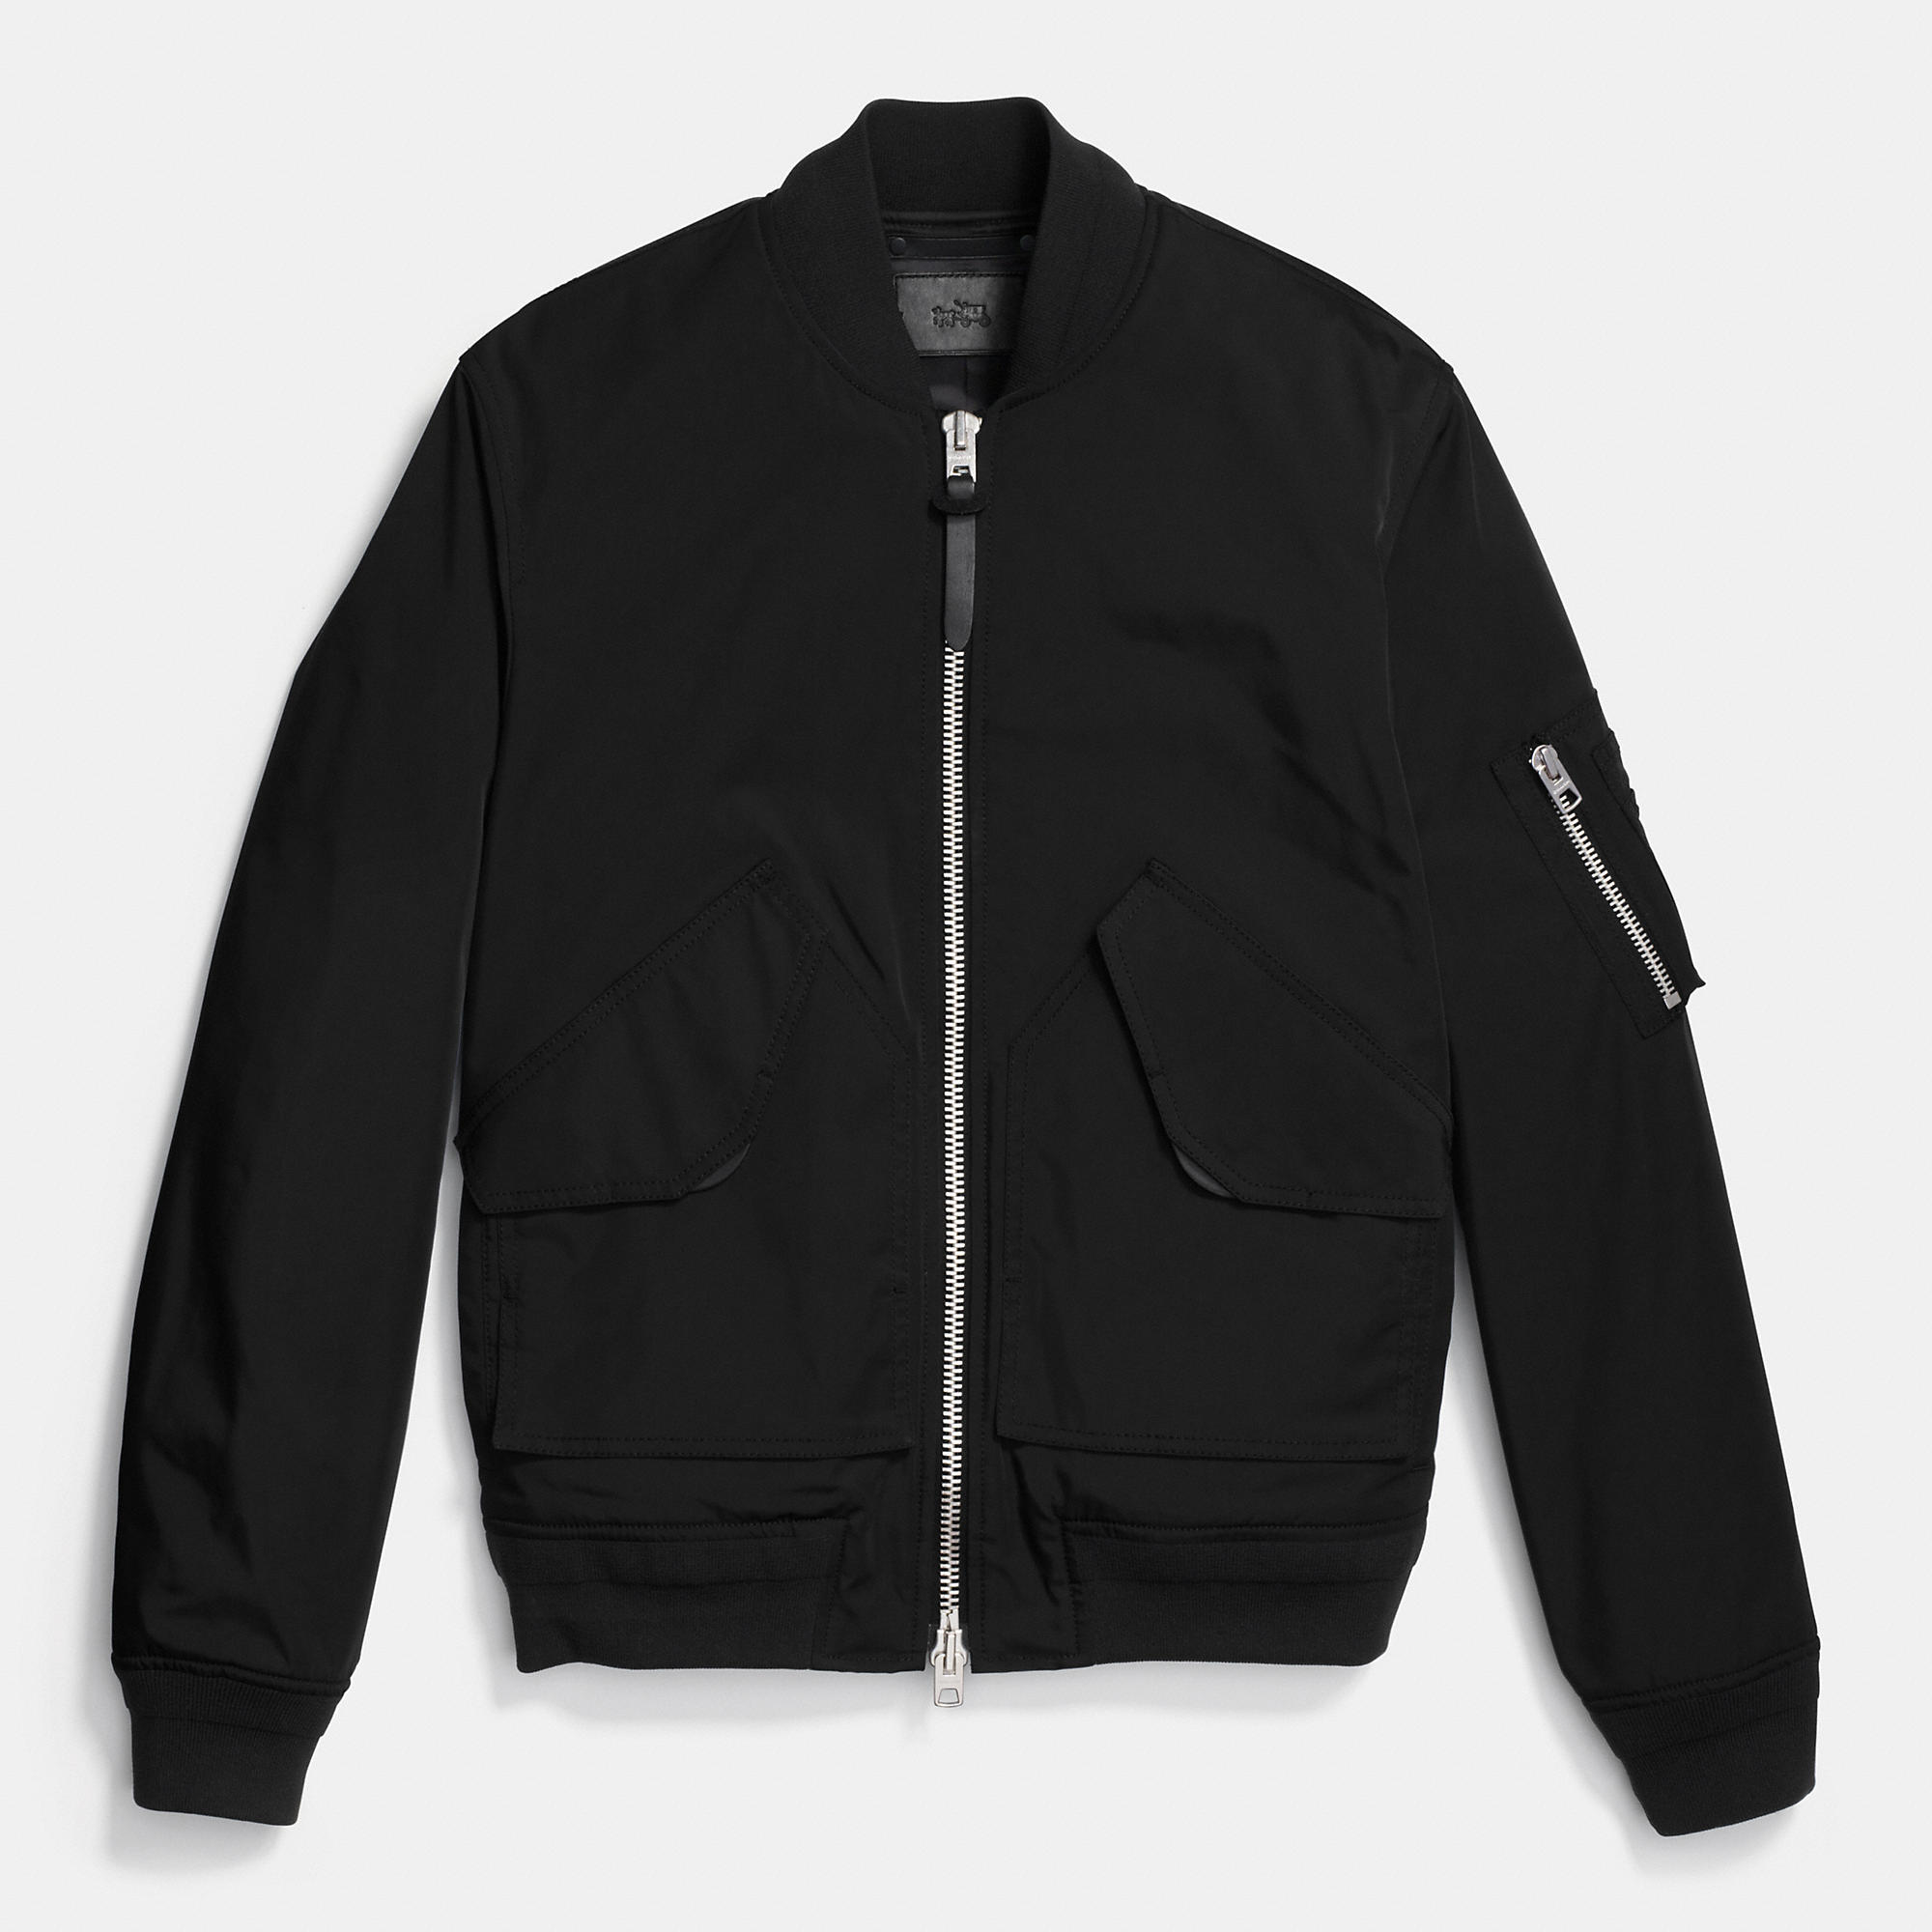 COACH Nylon Ma-1 Jacket in Black for Men - Lyst